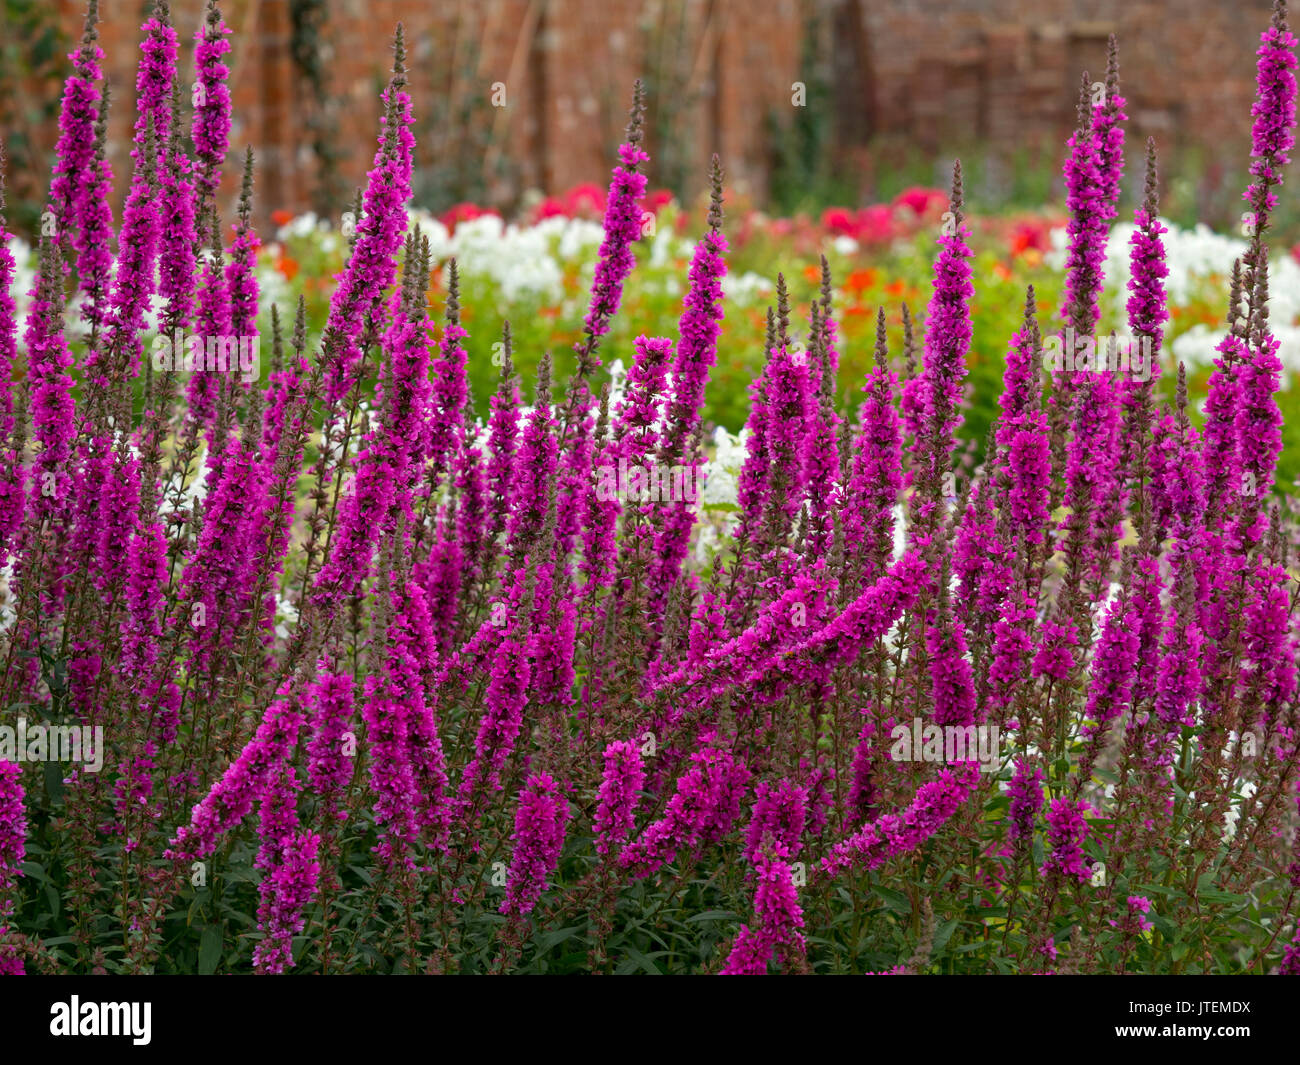 Lythrum virgatum 'Dropmore Purple' in garden border Stock Photo